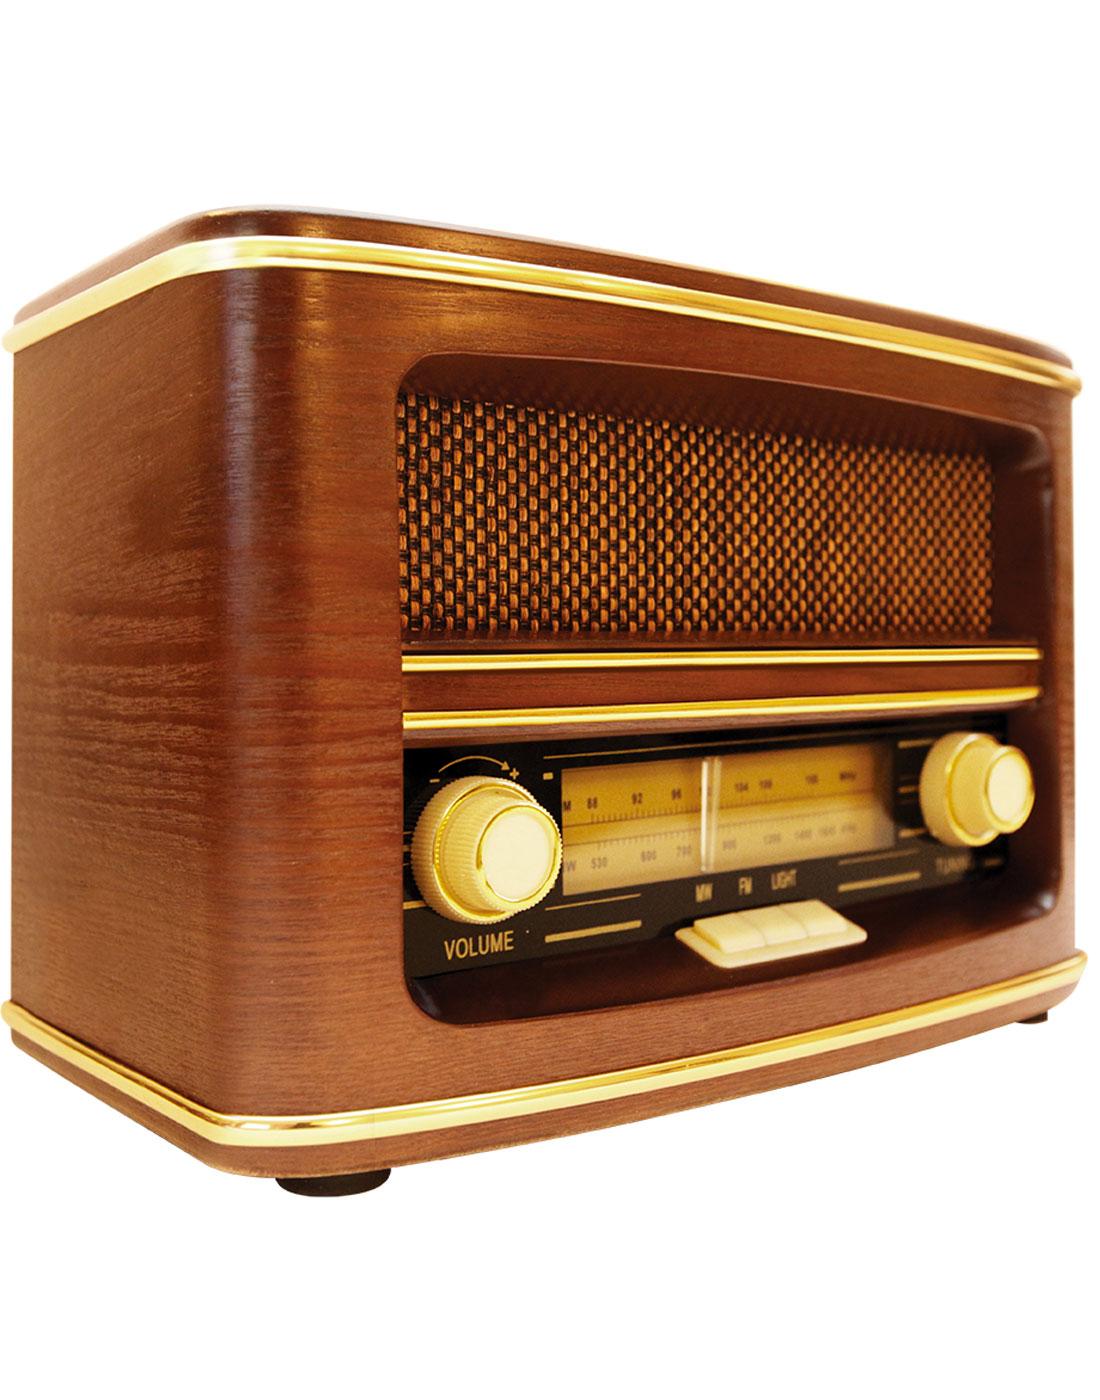 GPO Retro Winchester Vintage Wooden AM/FM Radio